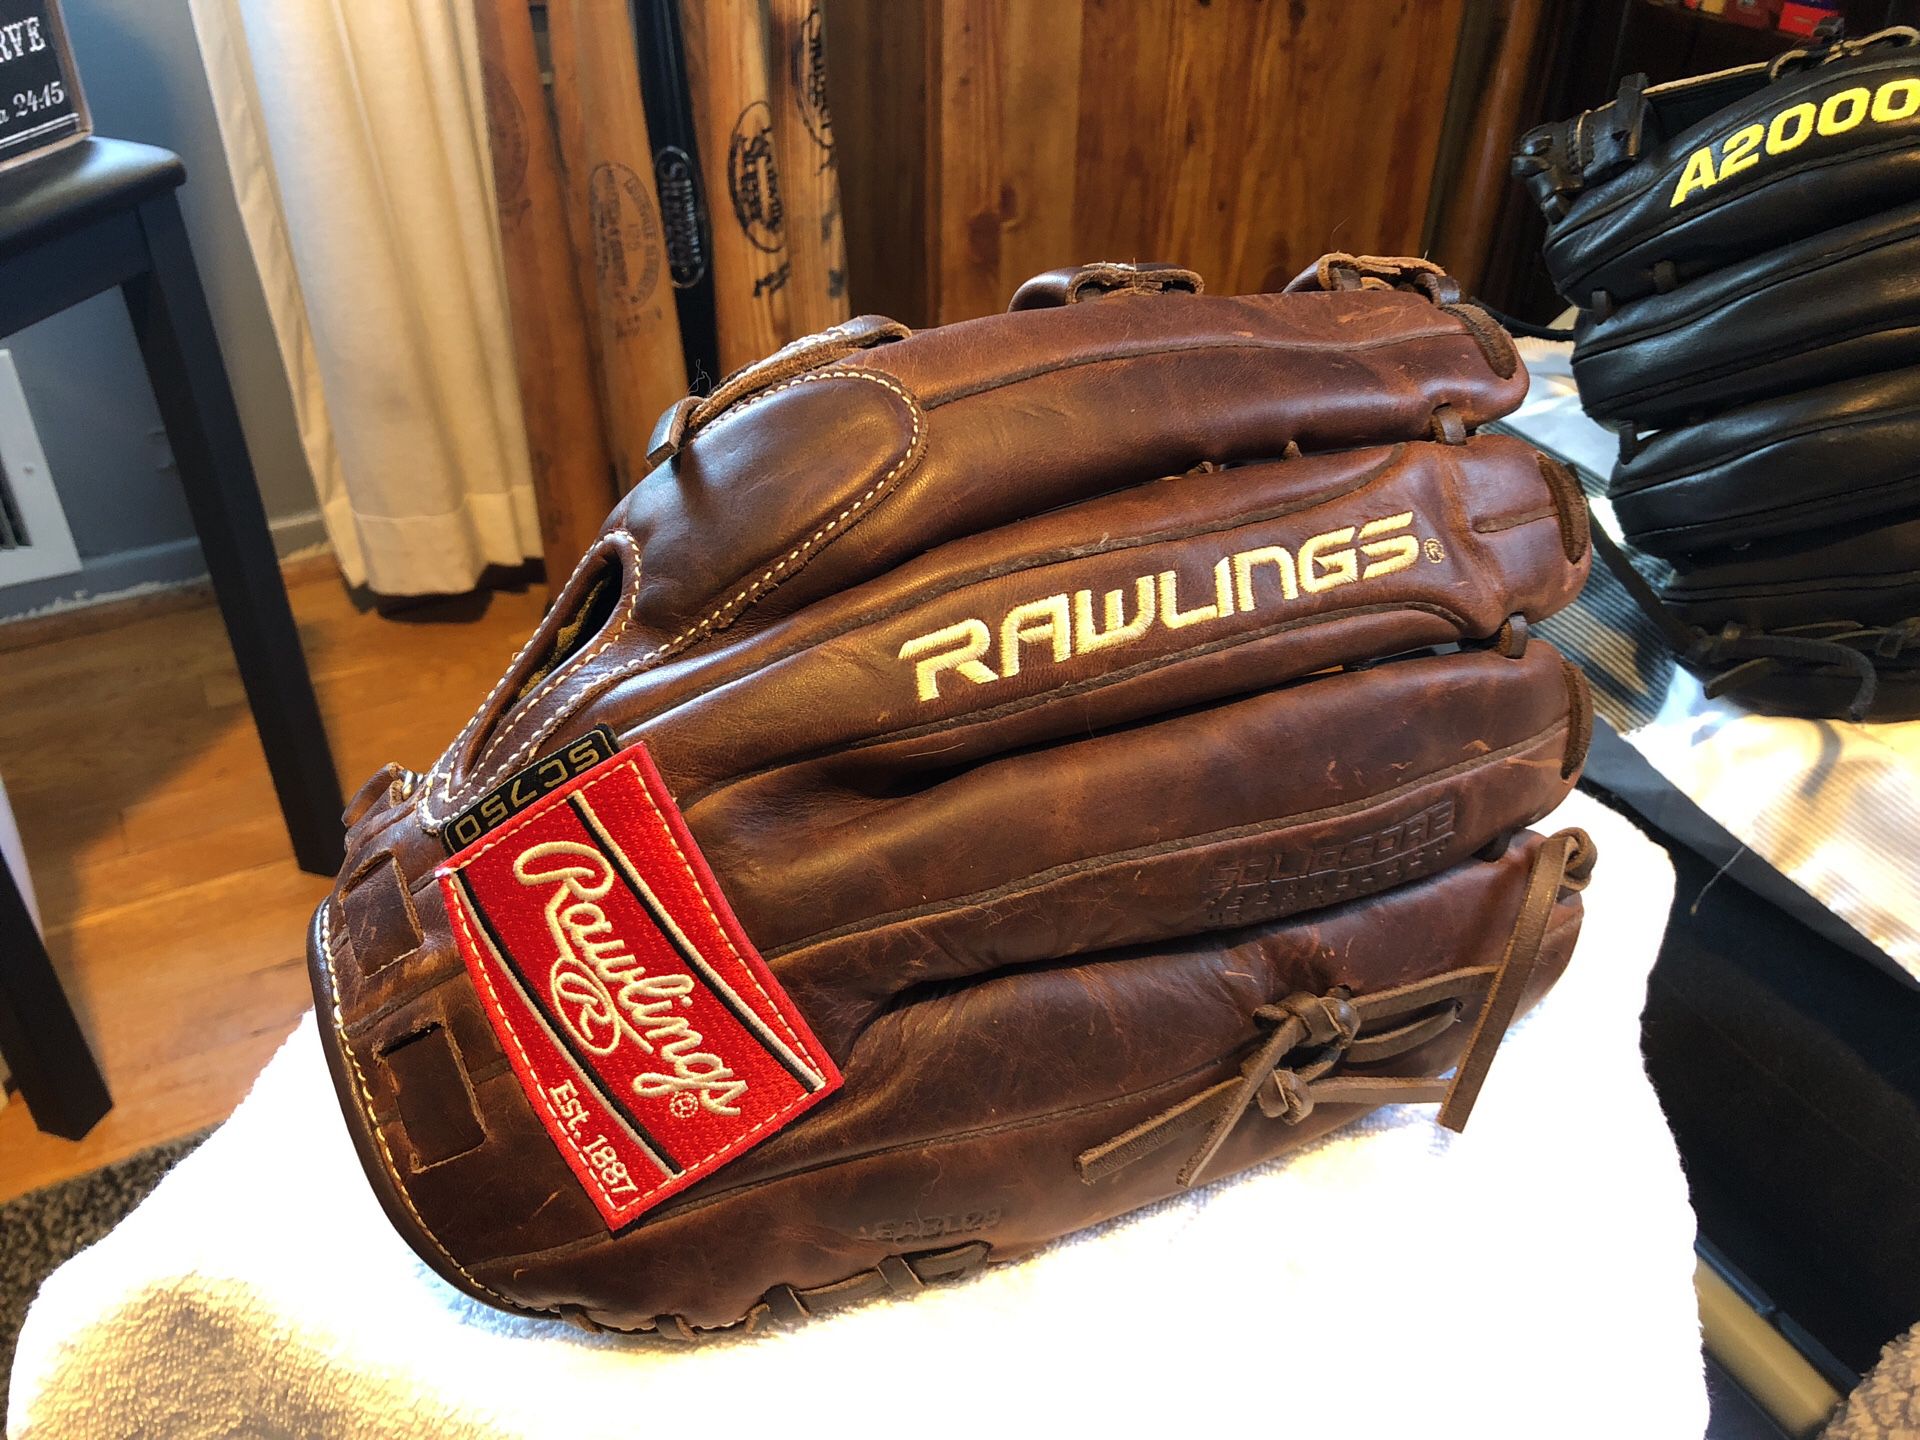 Rawlings Revo Sc750 12.75” LHT baseball glove